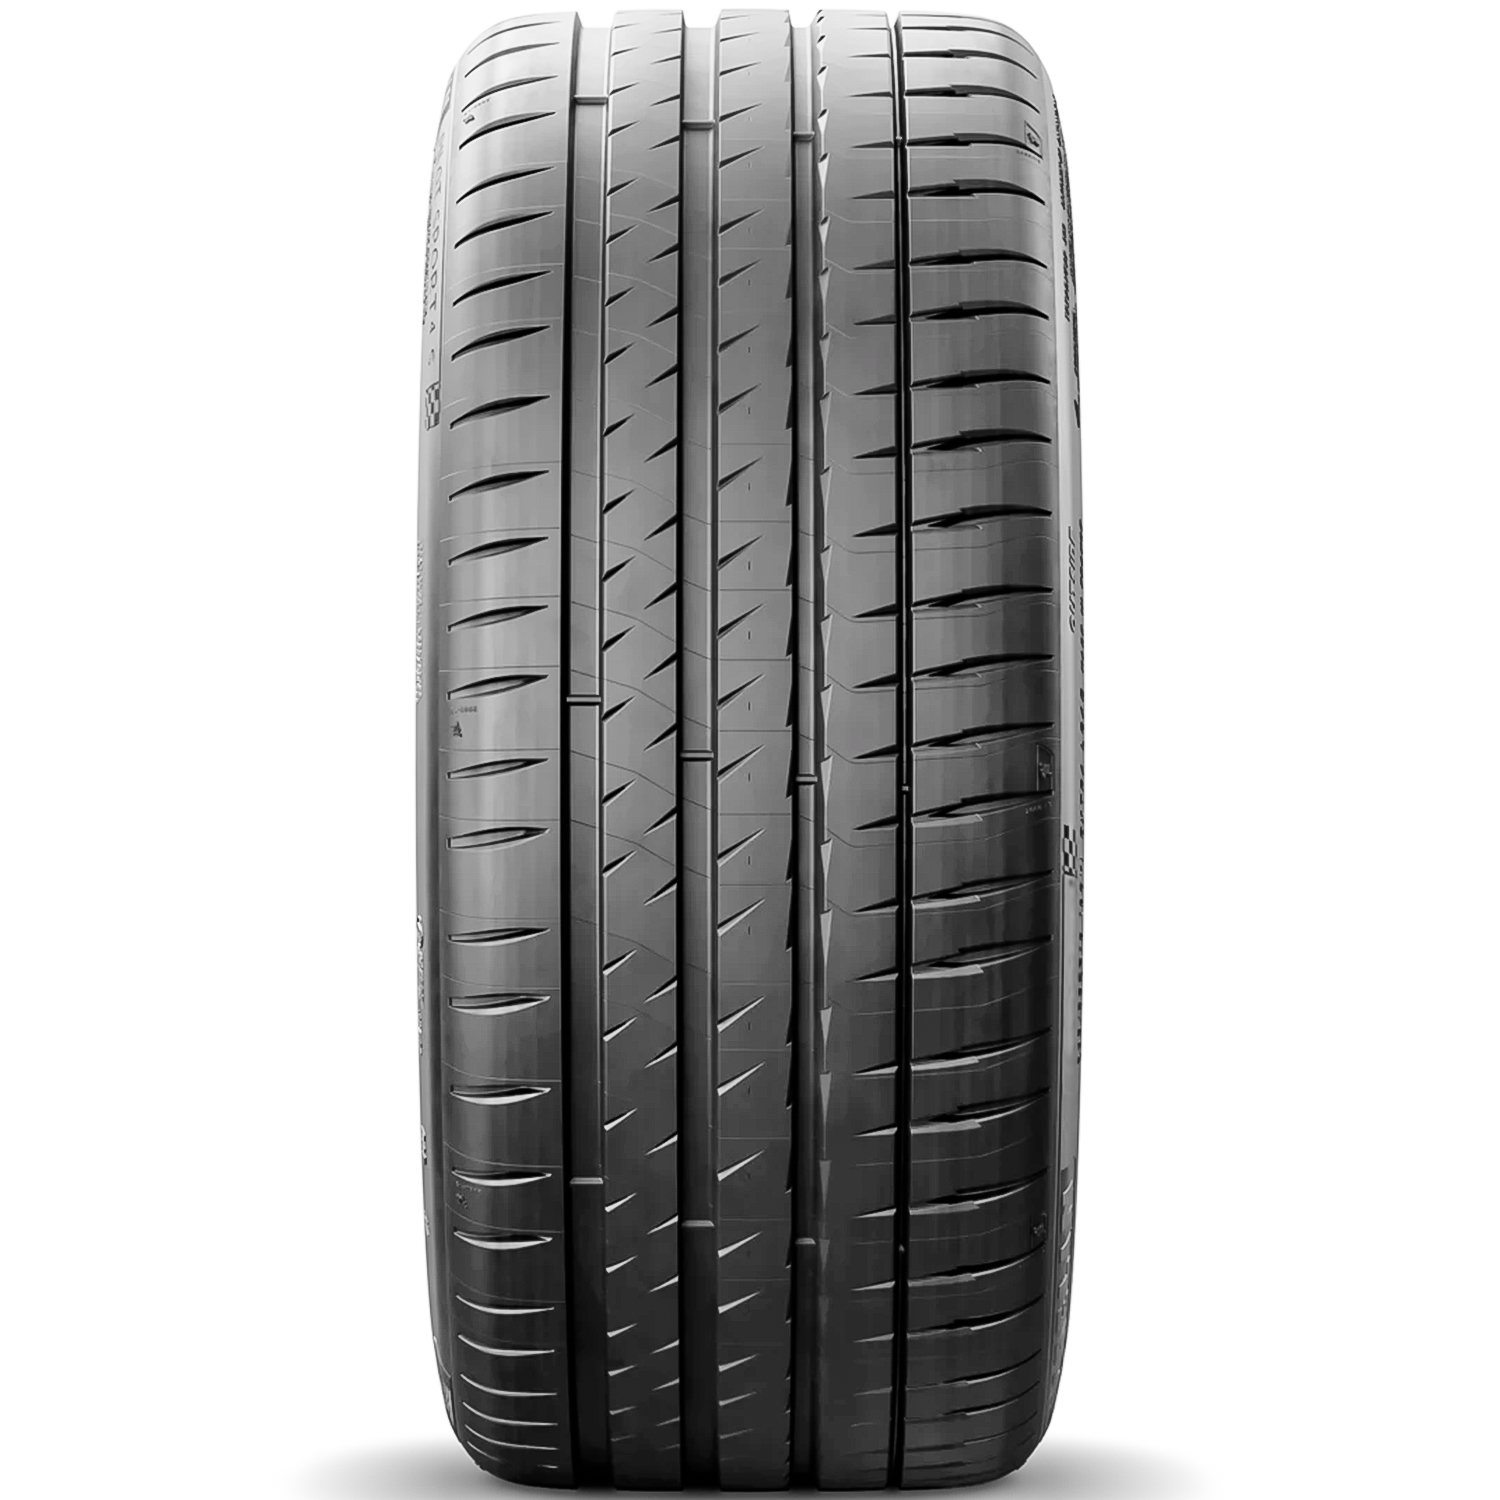 Michelin Pilot Sport 4S Performance 215/45ZR17 (91Y) XL Passenger Tire - image 3 of 8